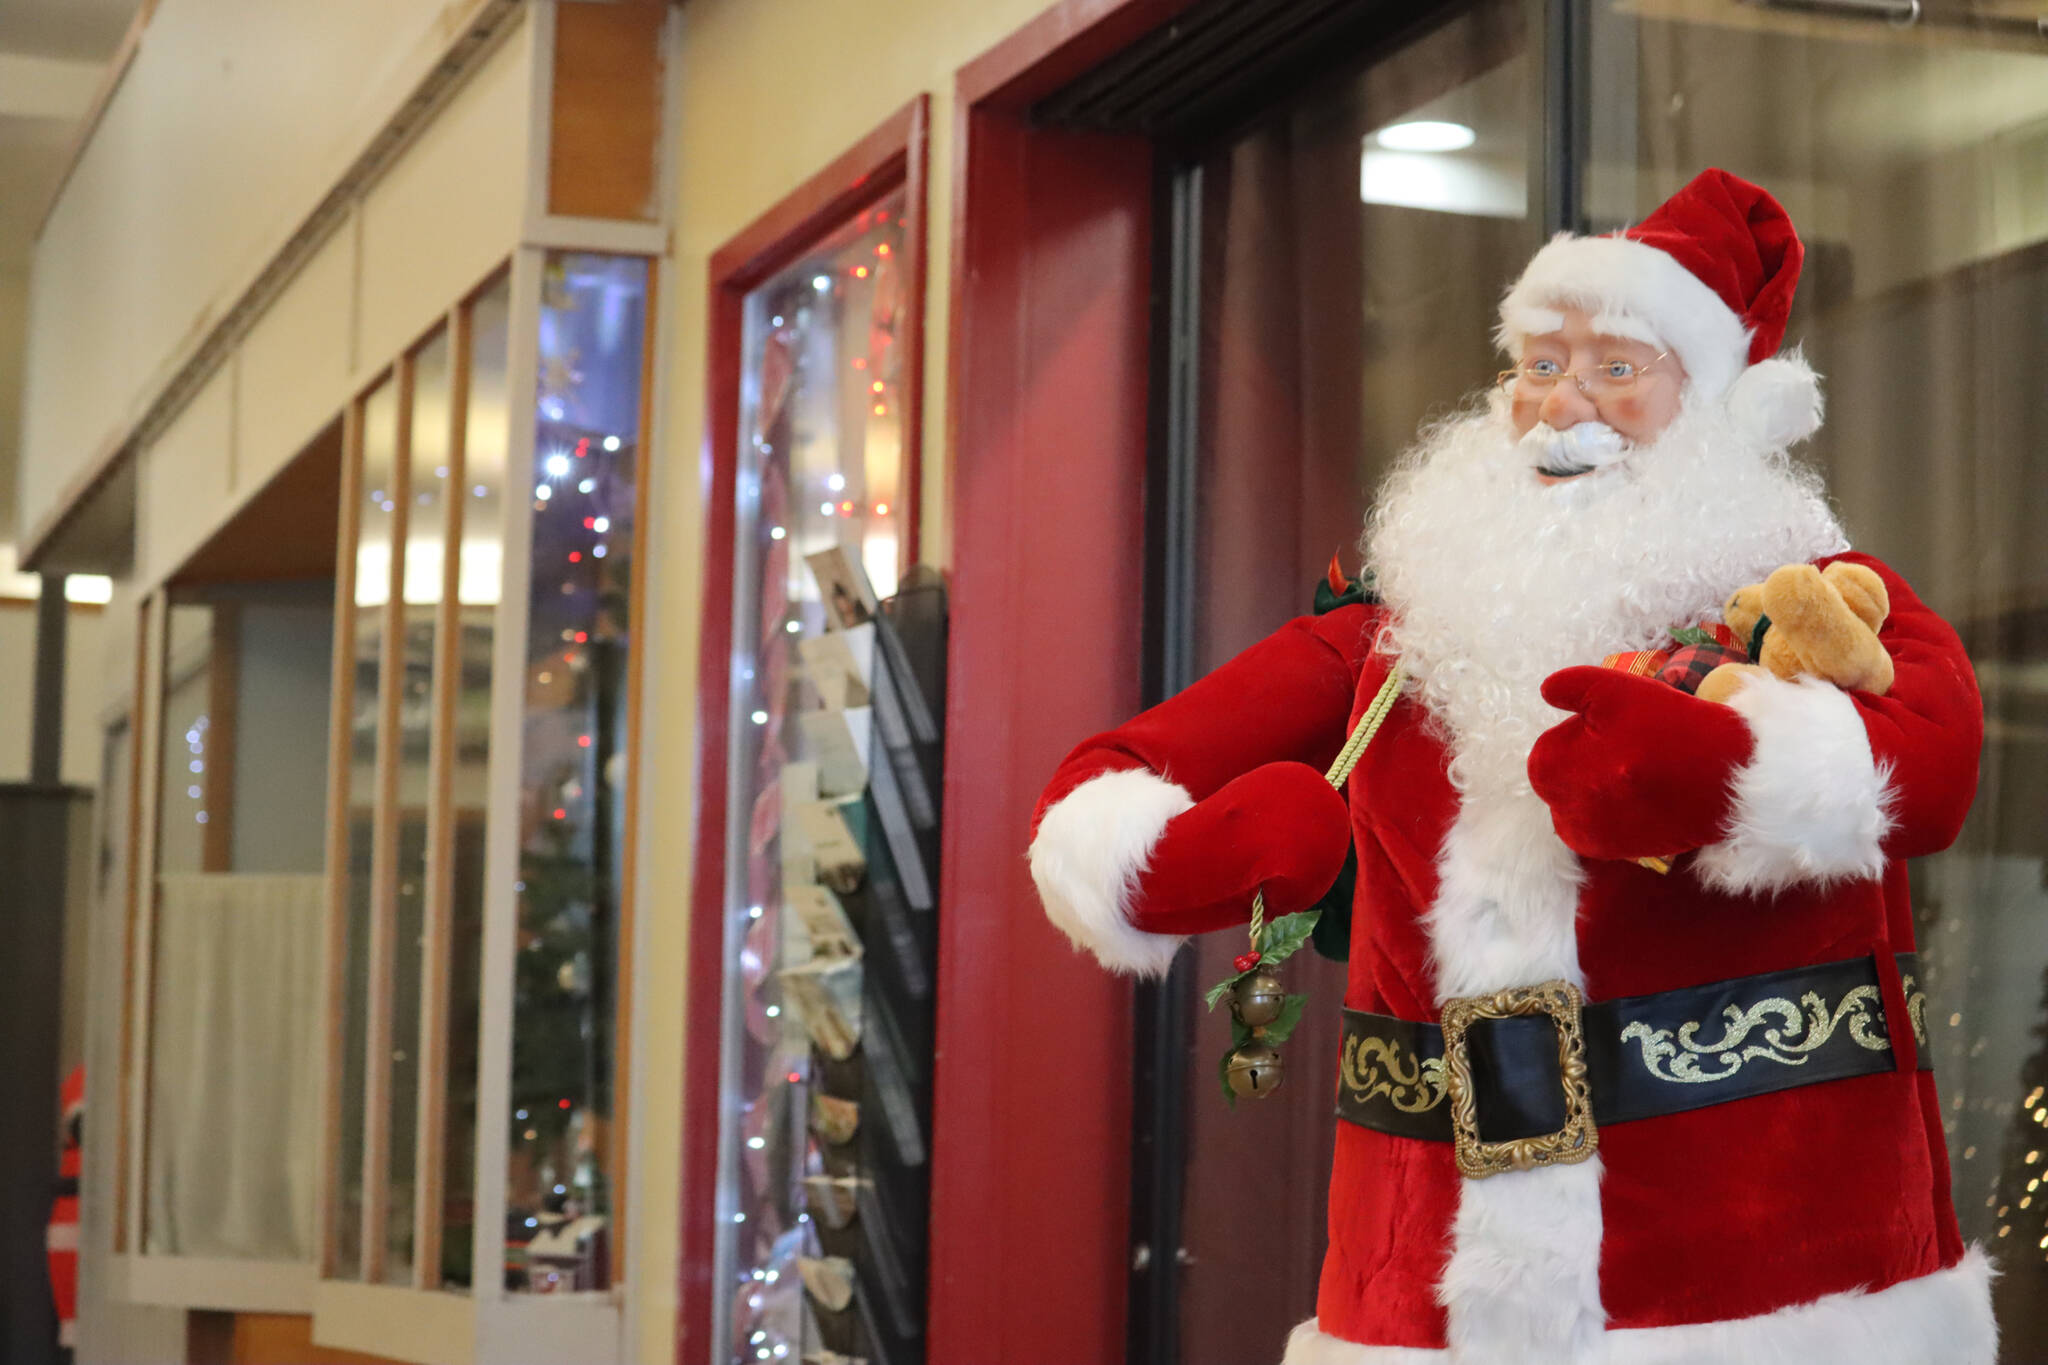 An animatronic Santa Claus greets shoppers at the entrance of a mall in Alaska. (Jonson Kuhn / Juneau Empire)